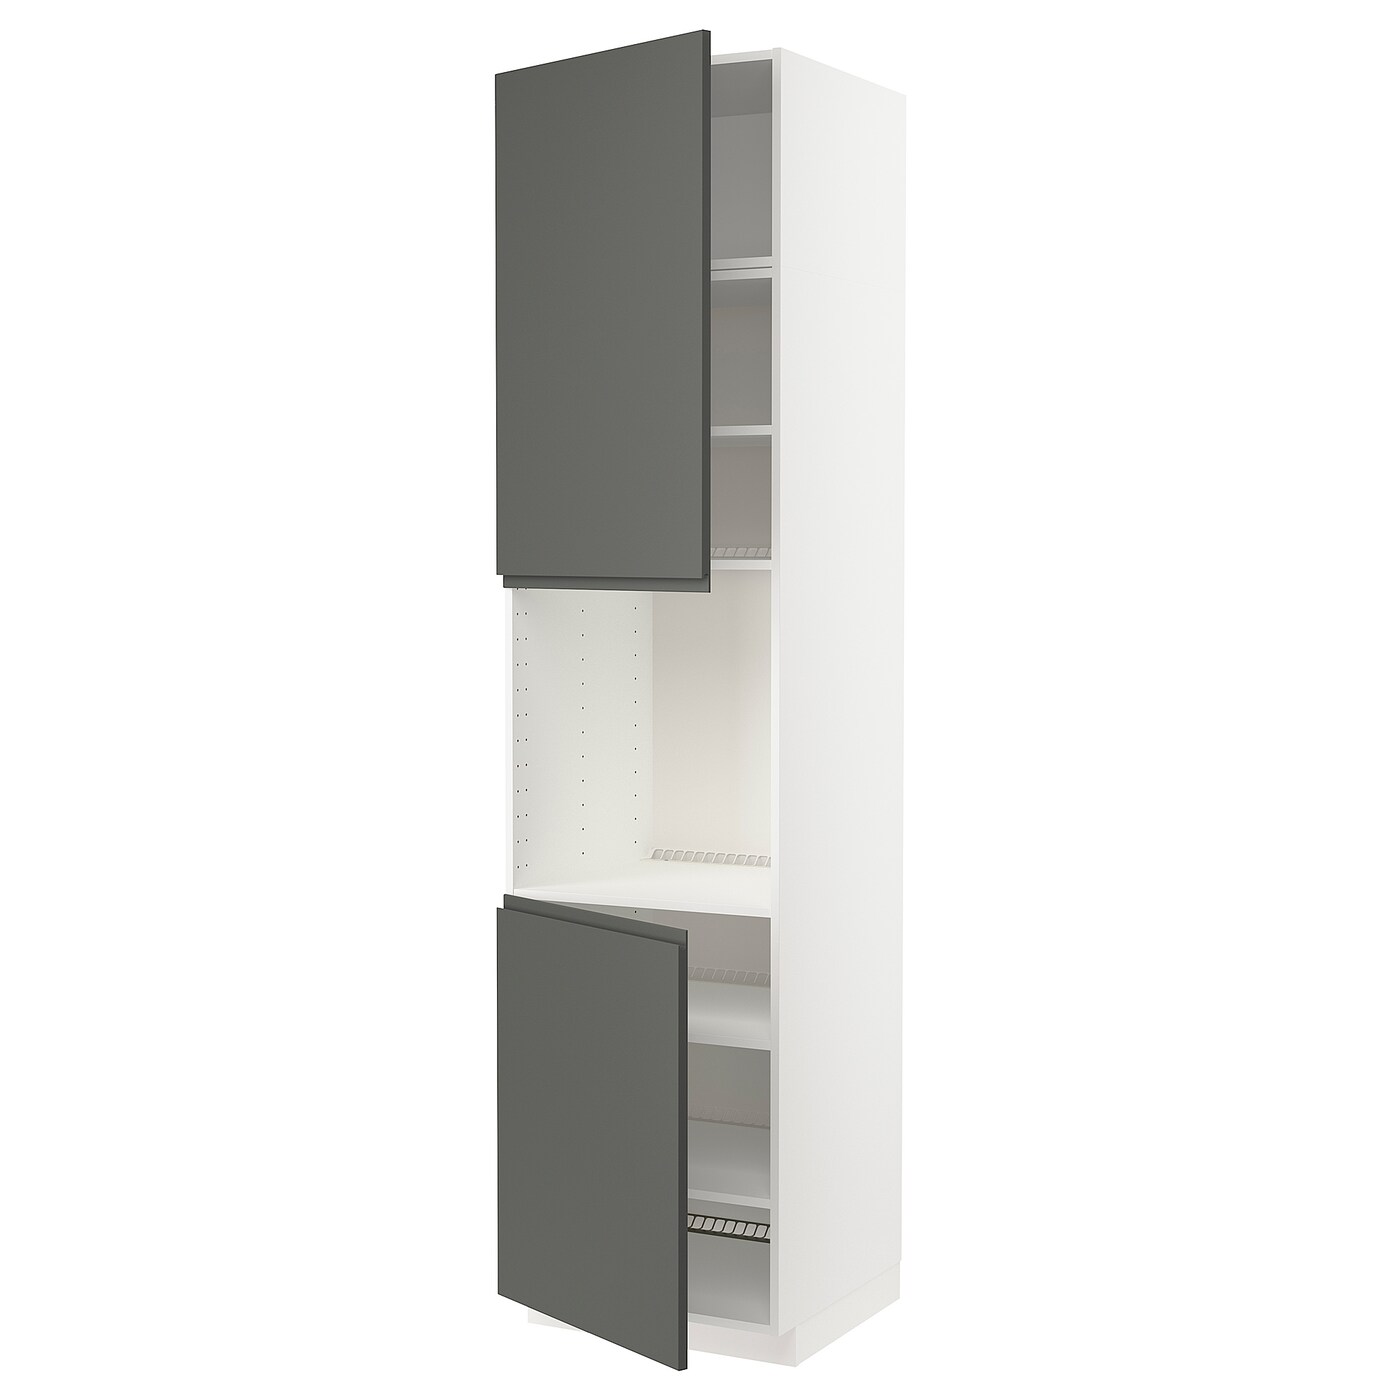 Высокий кухонный шкаф с полками - IKEA METOD/МЕТОД ИКЕА, 240х60х60 см, белый/темно-серый